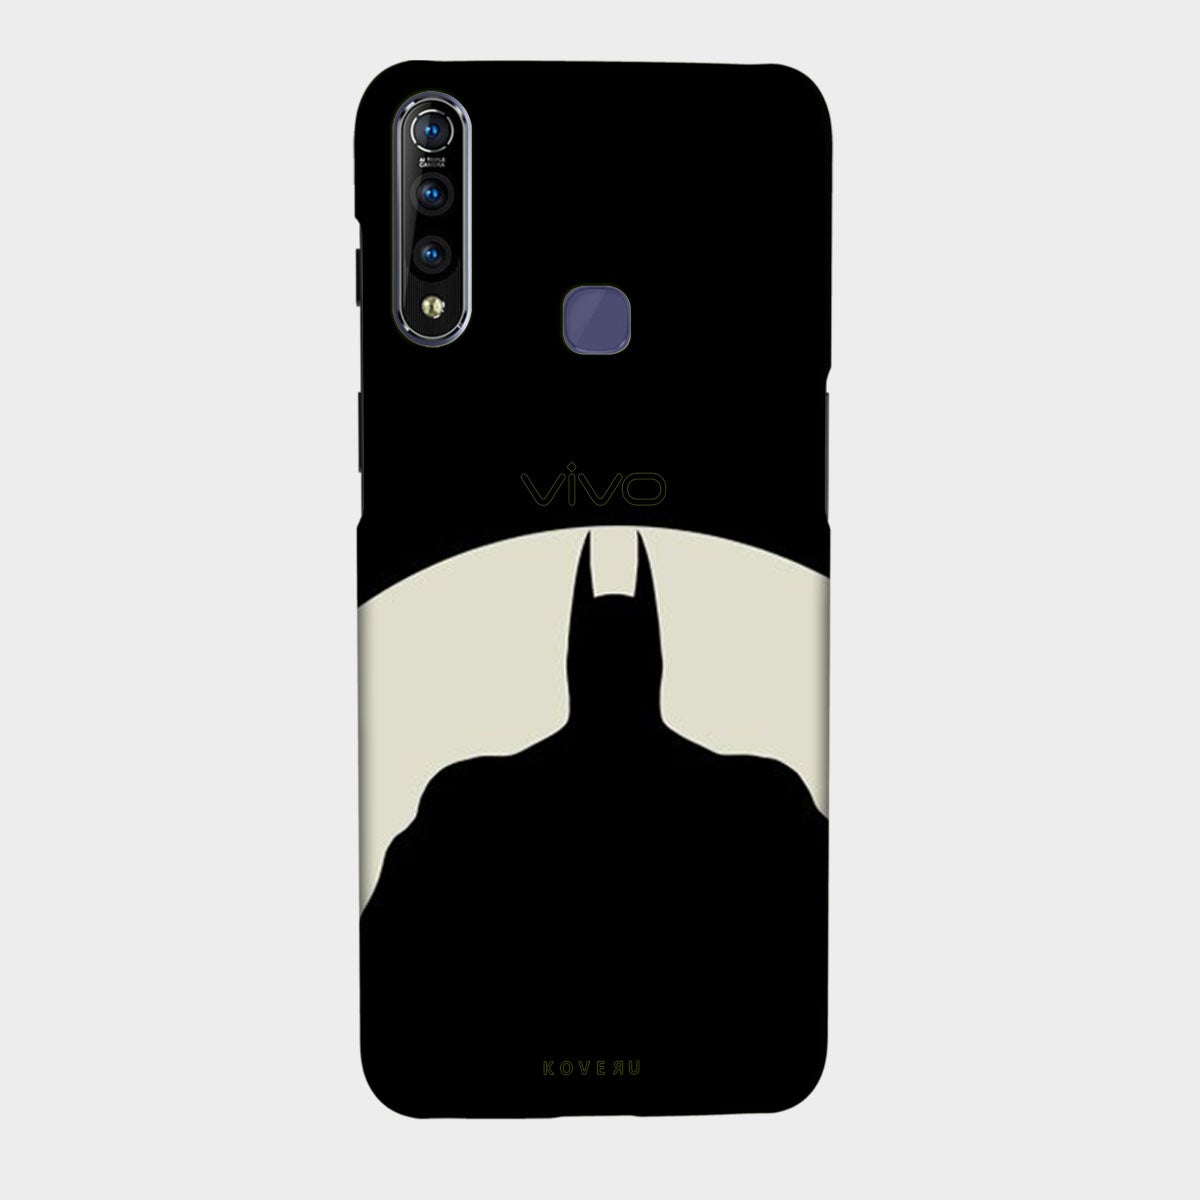 Batman - In the Moon - Mobile Phone Cover - Hard Case - Vivo